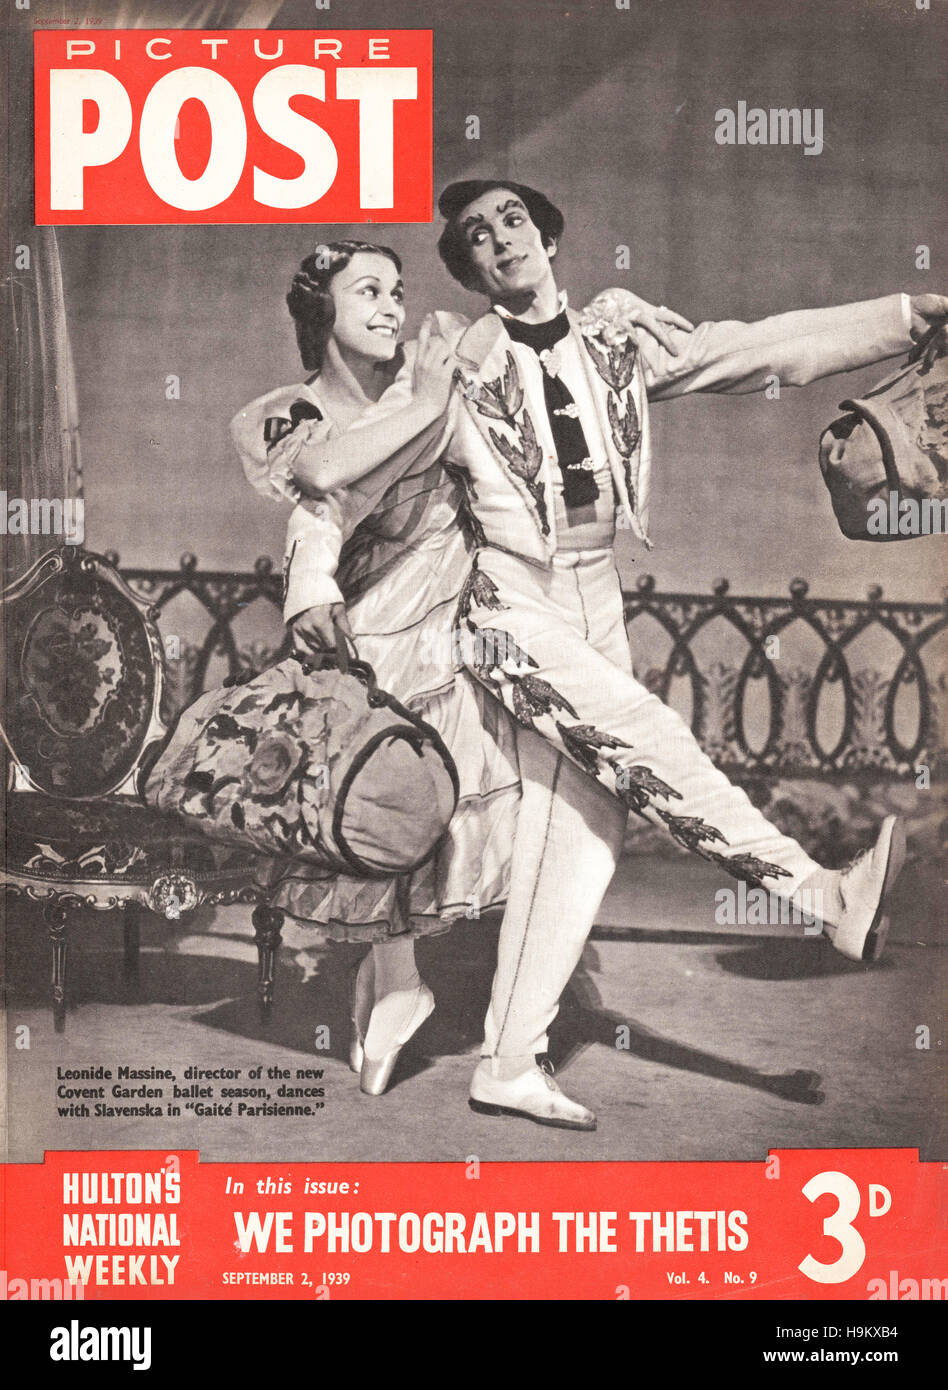 1939 Picture Post Ballet dancer Leonide Massine with Slavenska Stock Photo